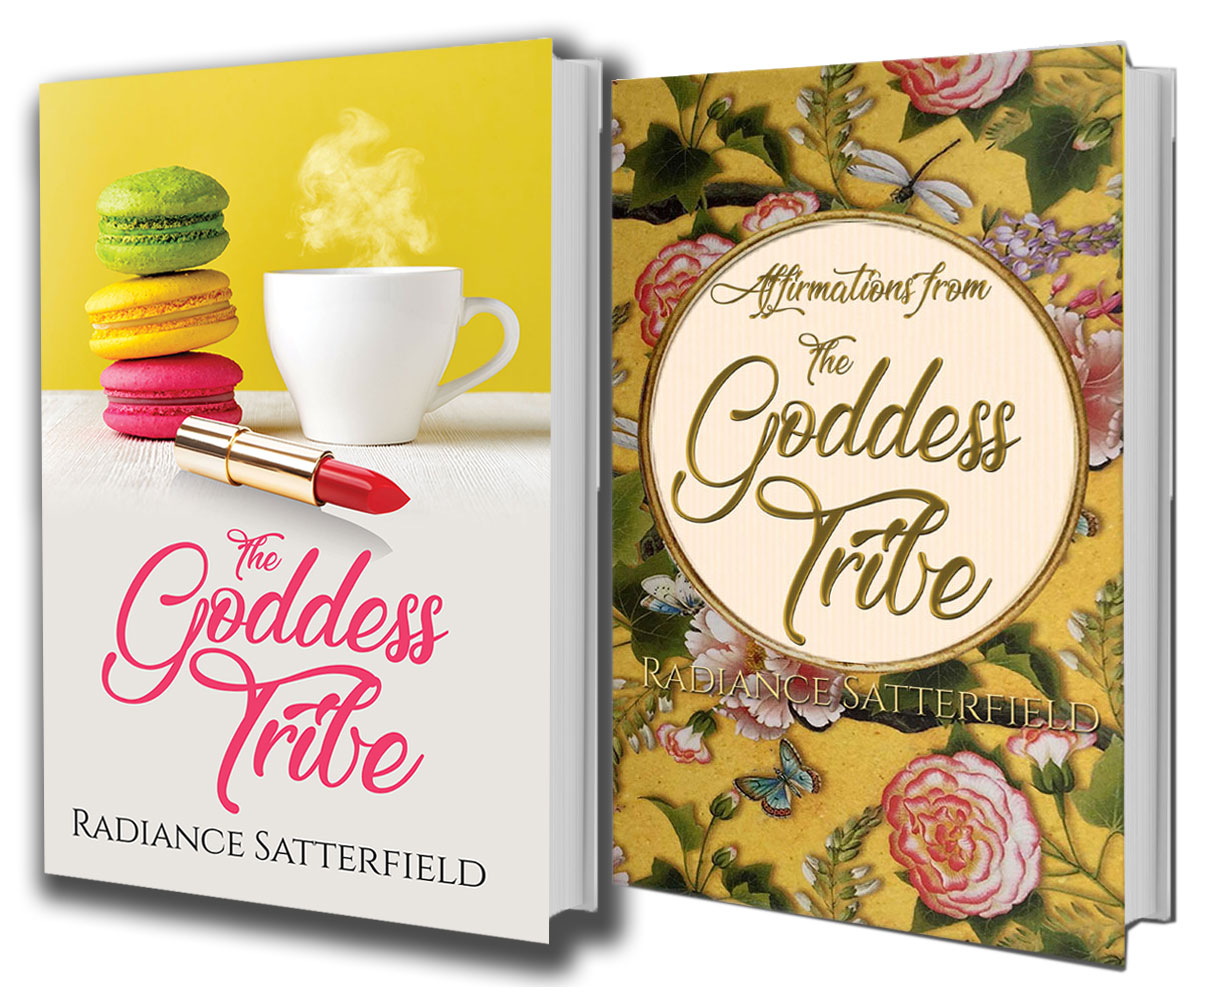 the goddess tribe novel by radiance satterfield